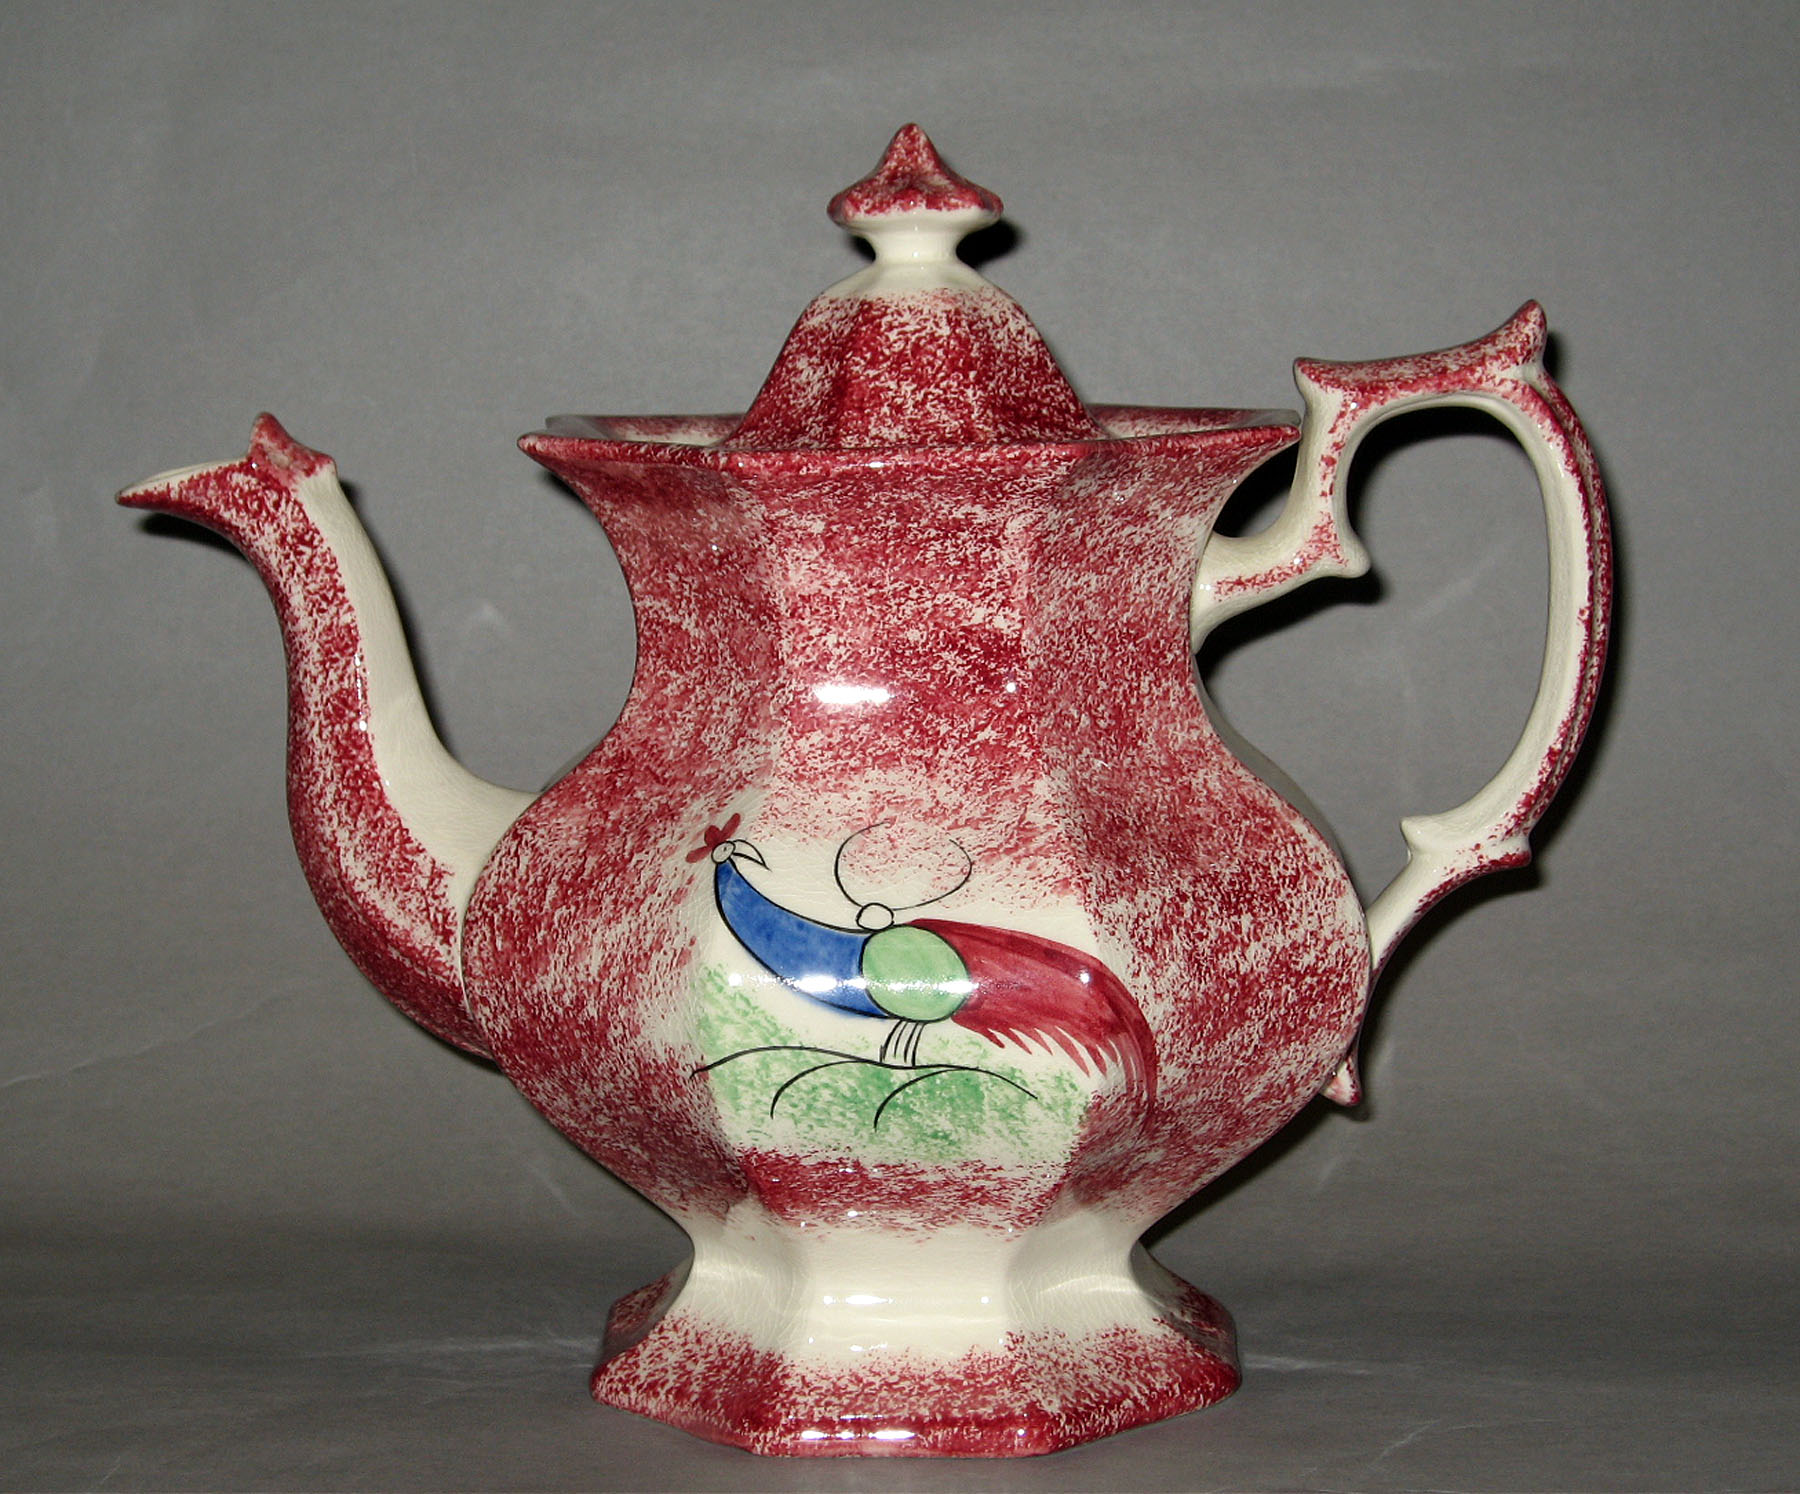 1962.0147 Spatterware teapot